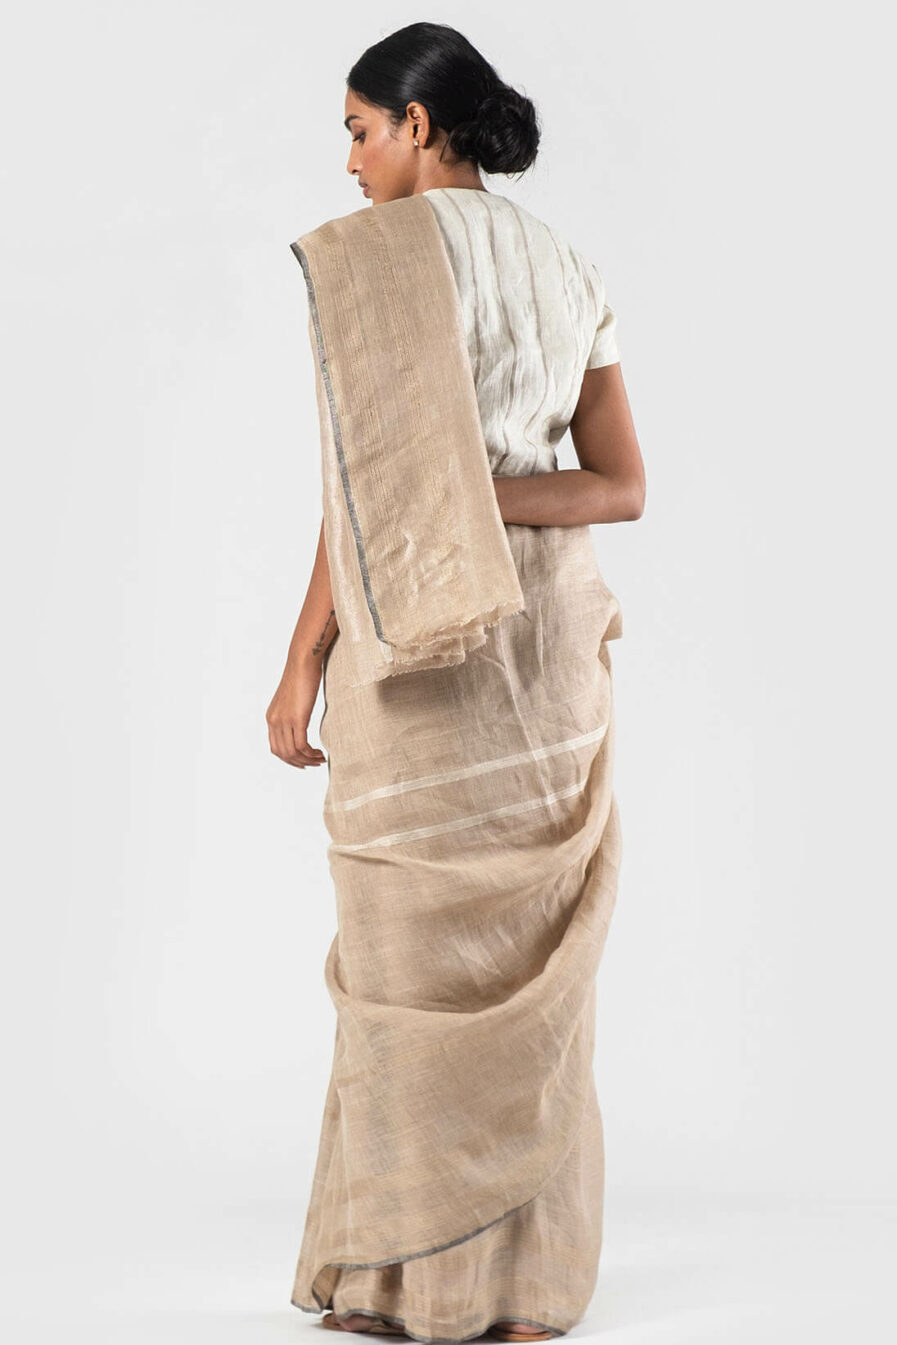 Anavila Beige Abstract leno striped linen sari